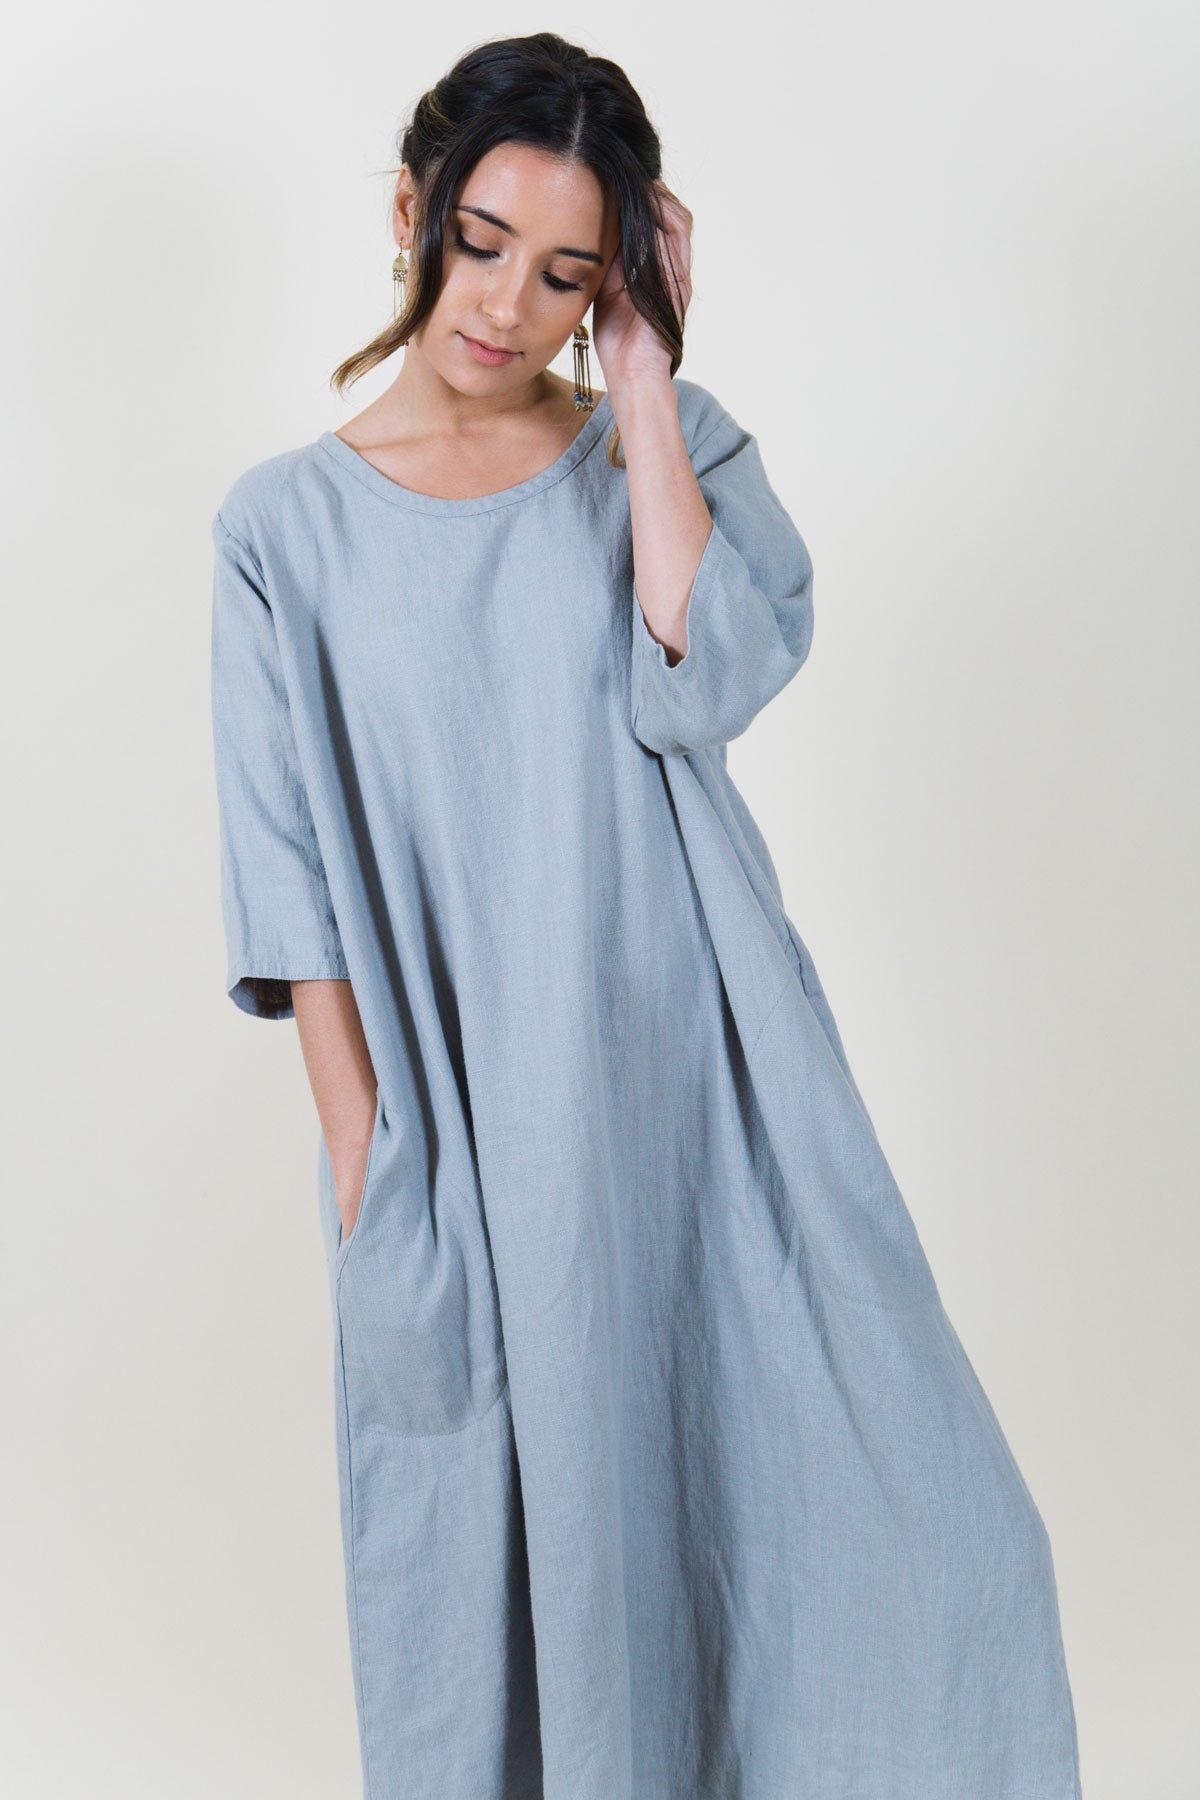 Minimal Linen Dress - Simple Dress in Linen, USA – Heart's Desire Clothing